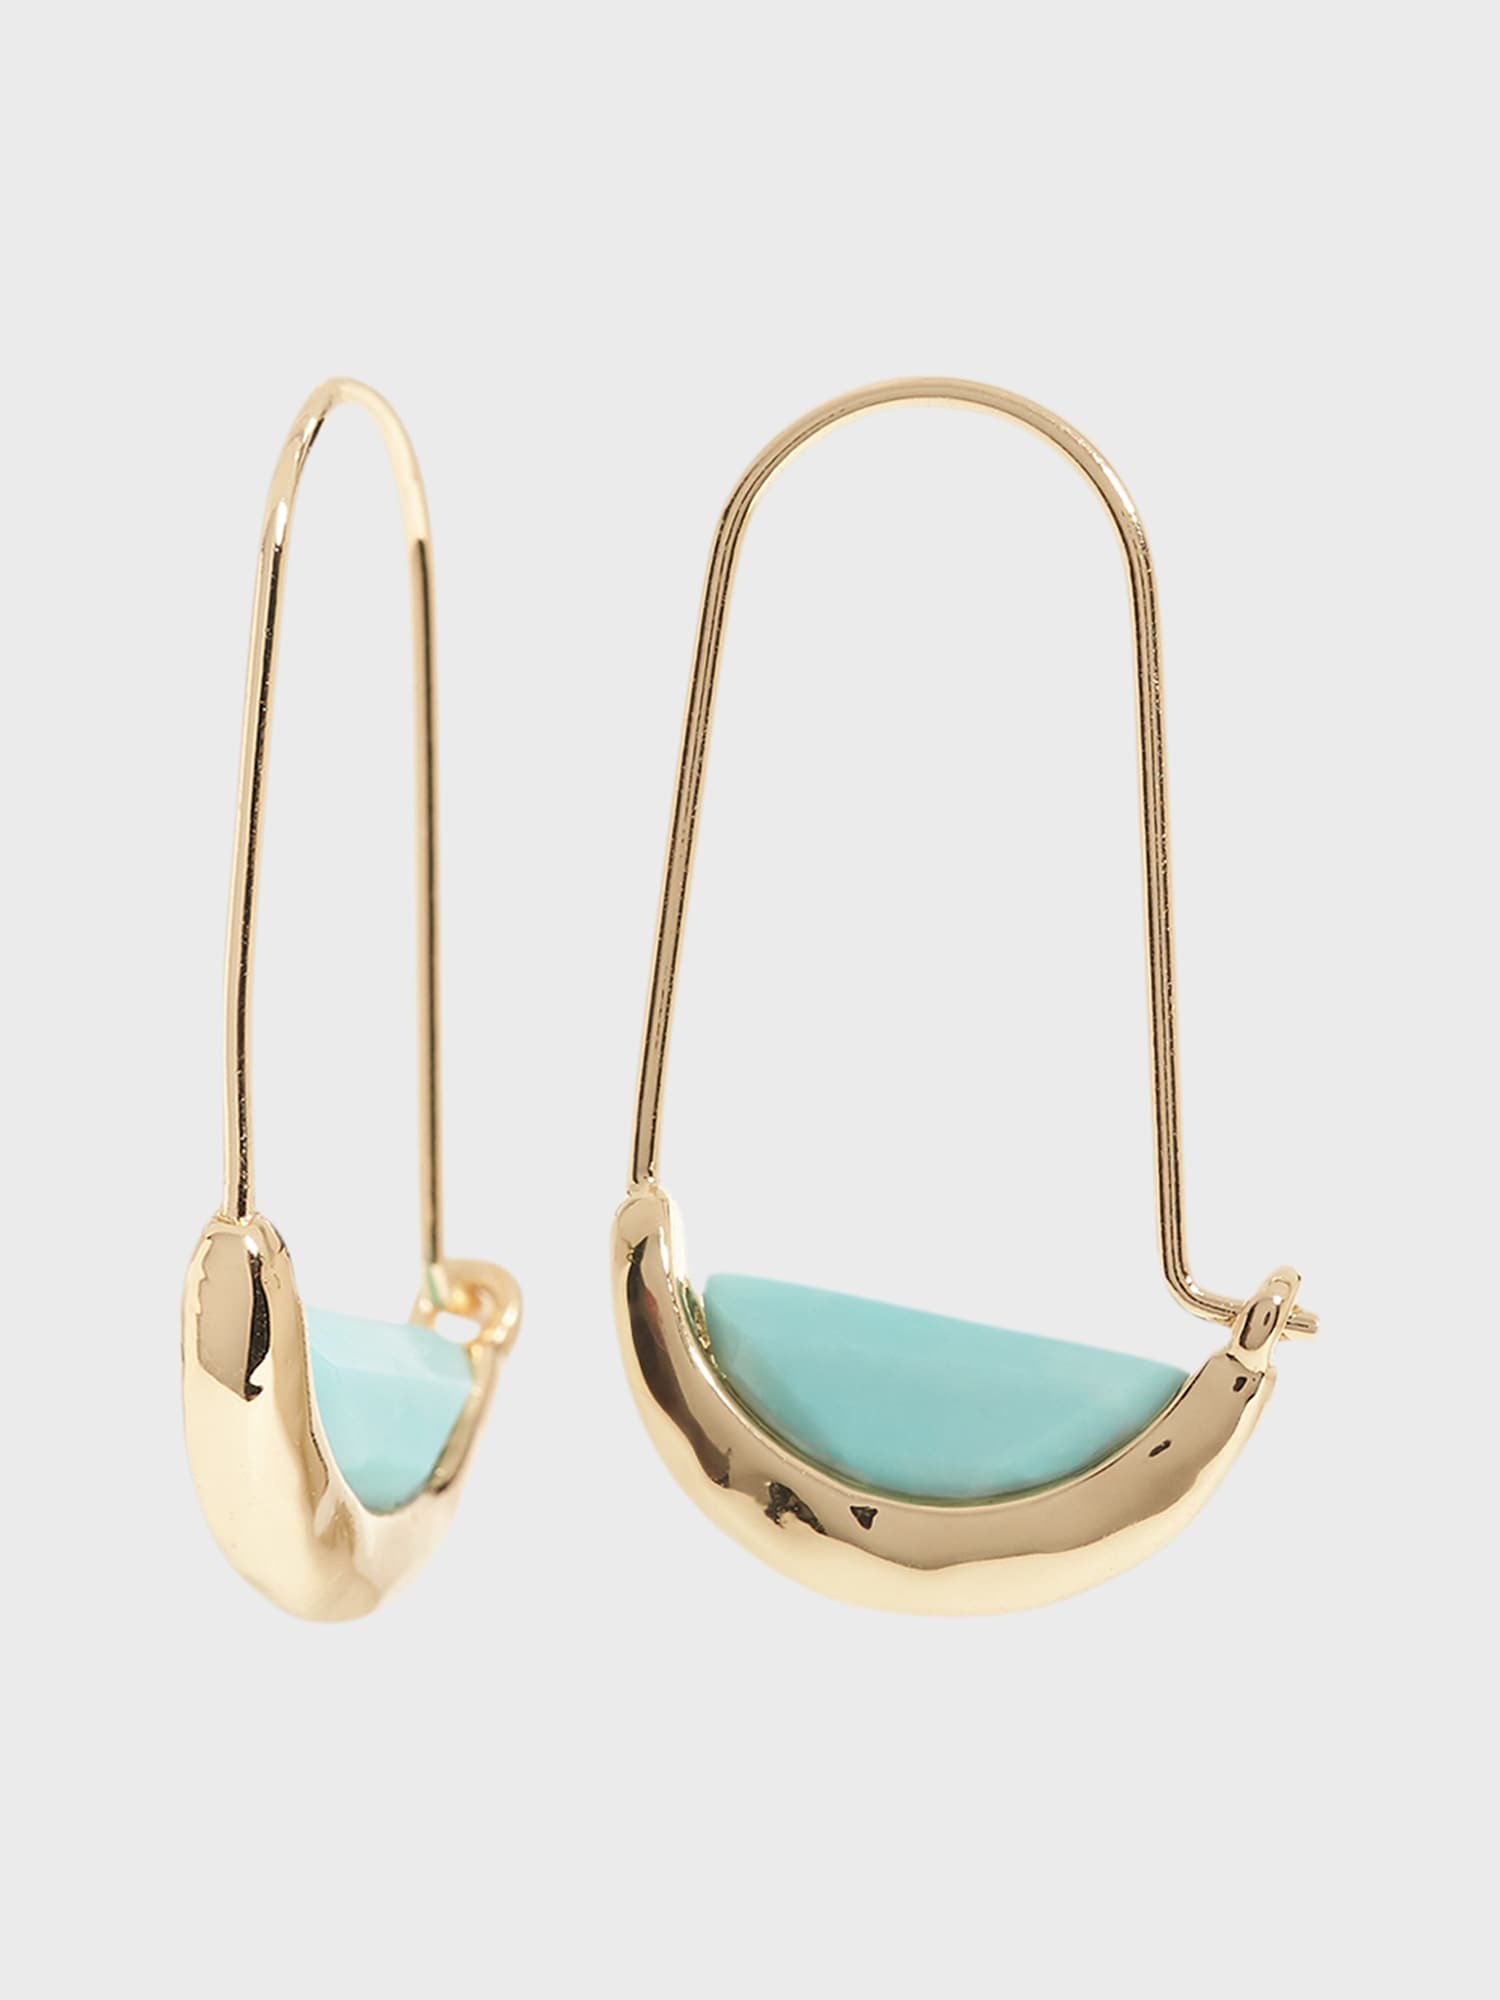 Turquoise Oval Hoop Earrings